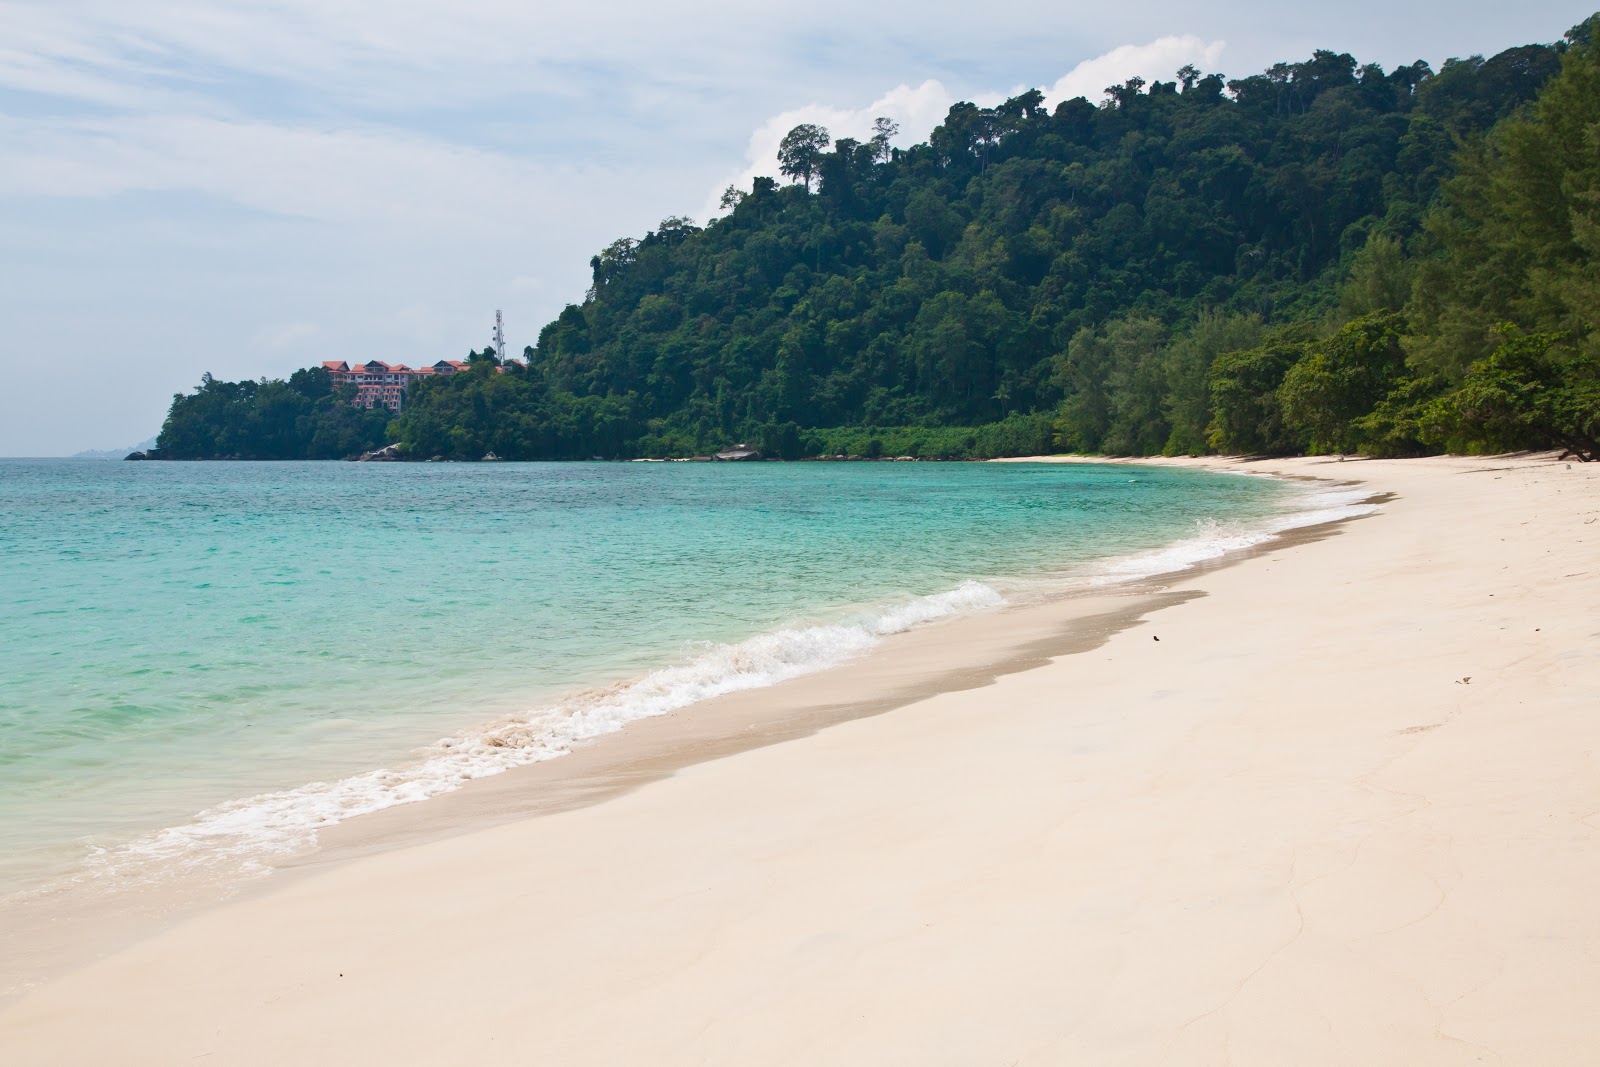 Photo of Pulau Tumuk Beach with gray sand surface